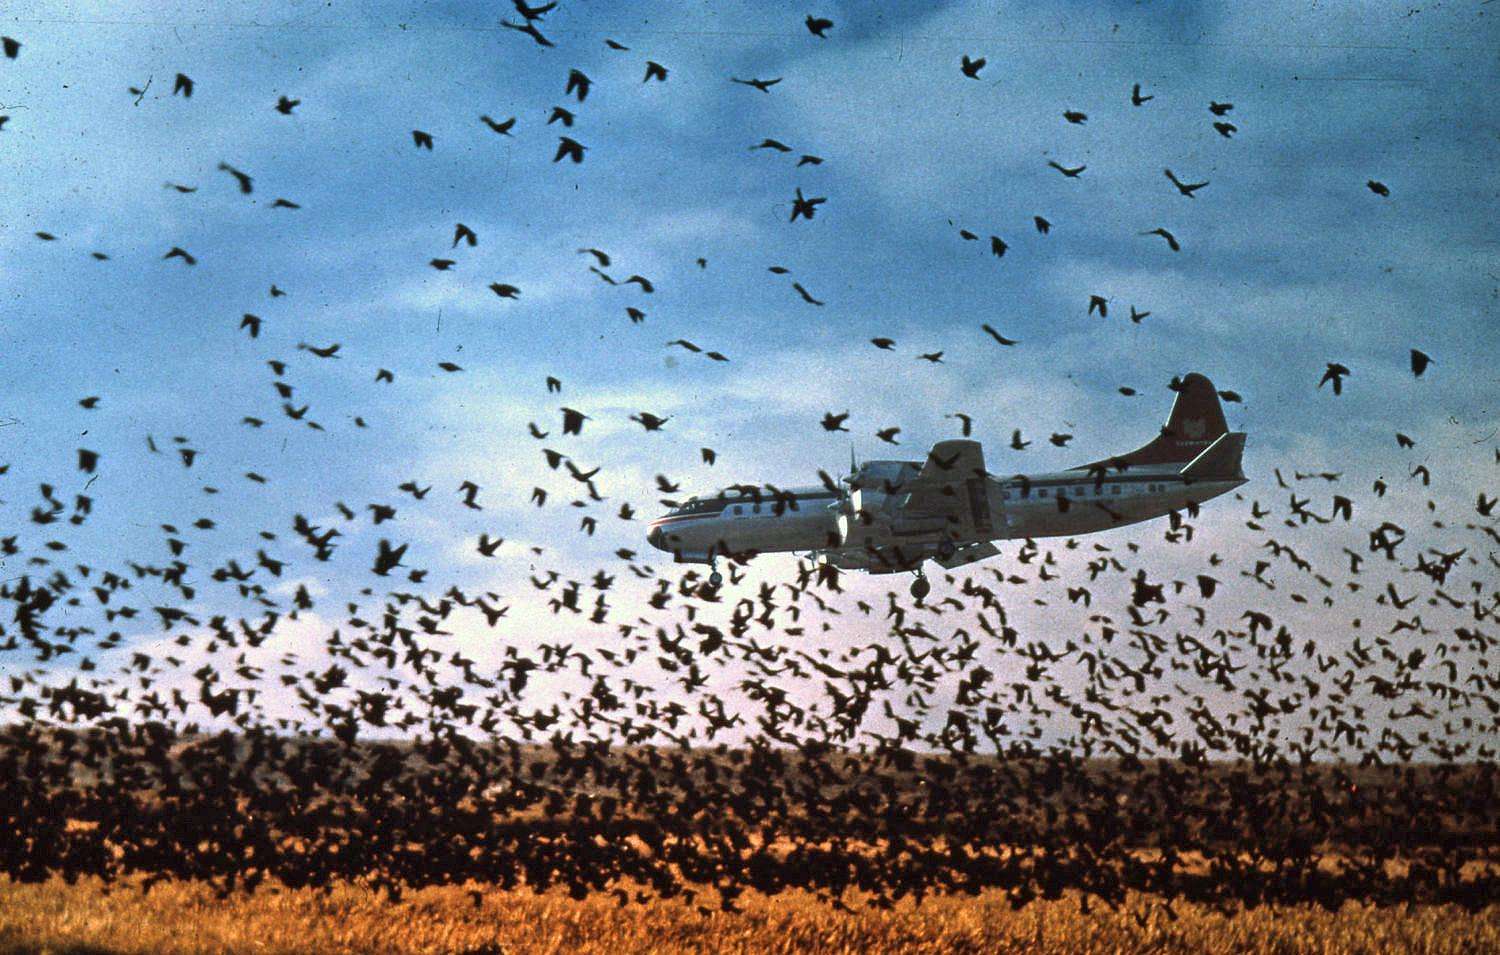 Plane landing as a flock of blackbirds takes flight